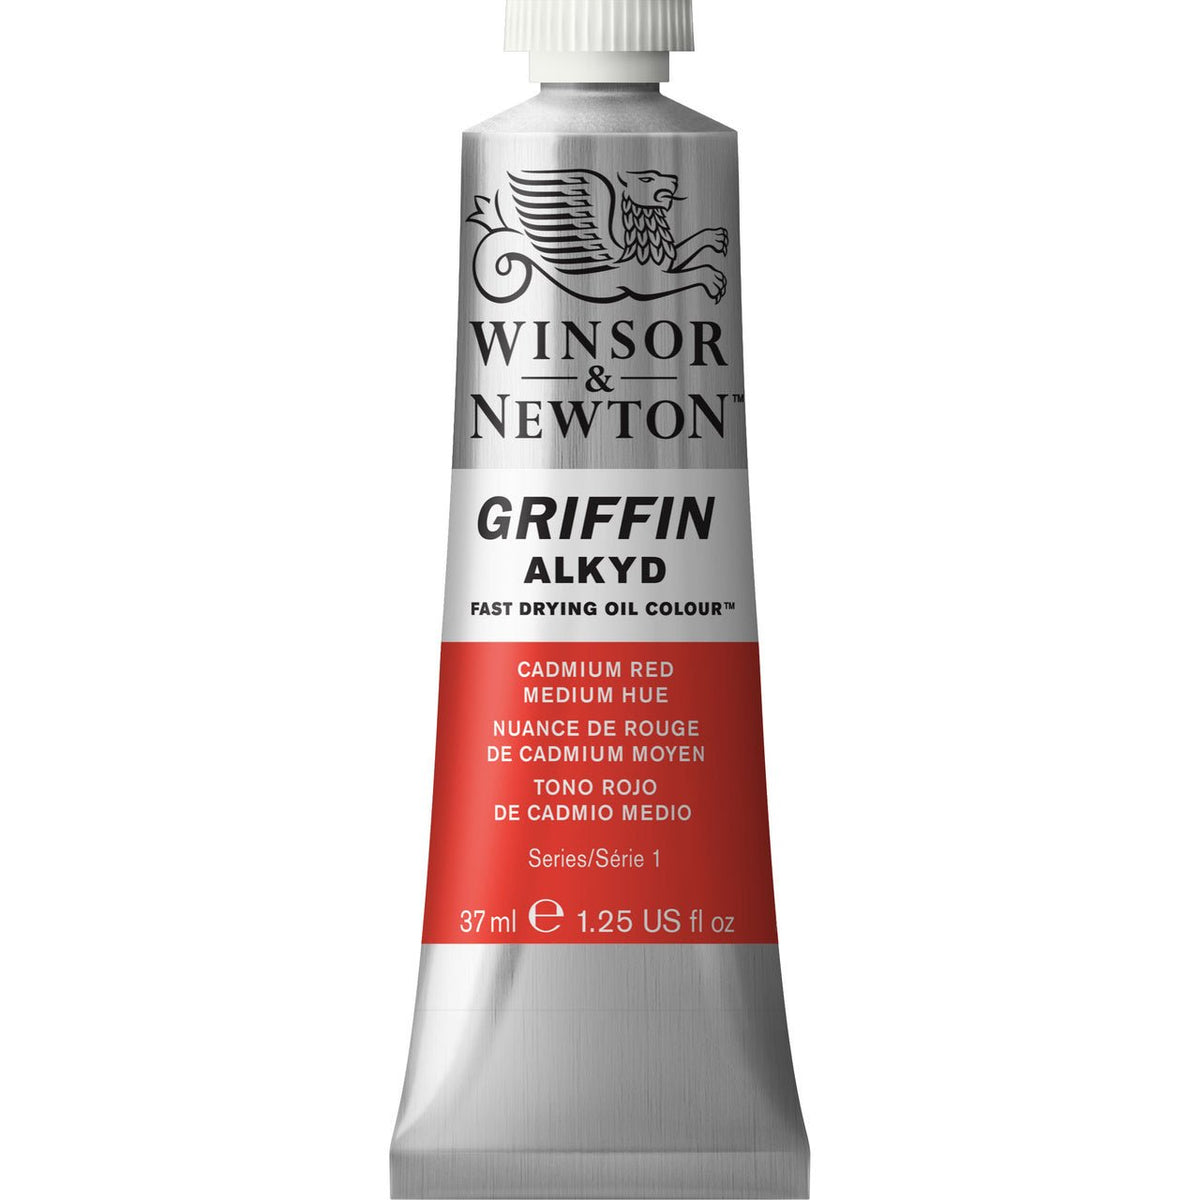 Winsor & Newton Griffin Alkyd 37ml Cadmium Red Medium Hue - merriartist.com